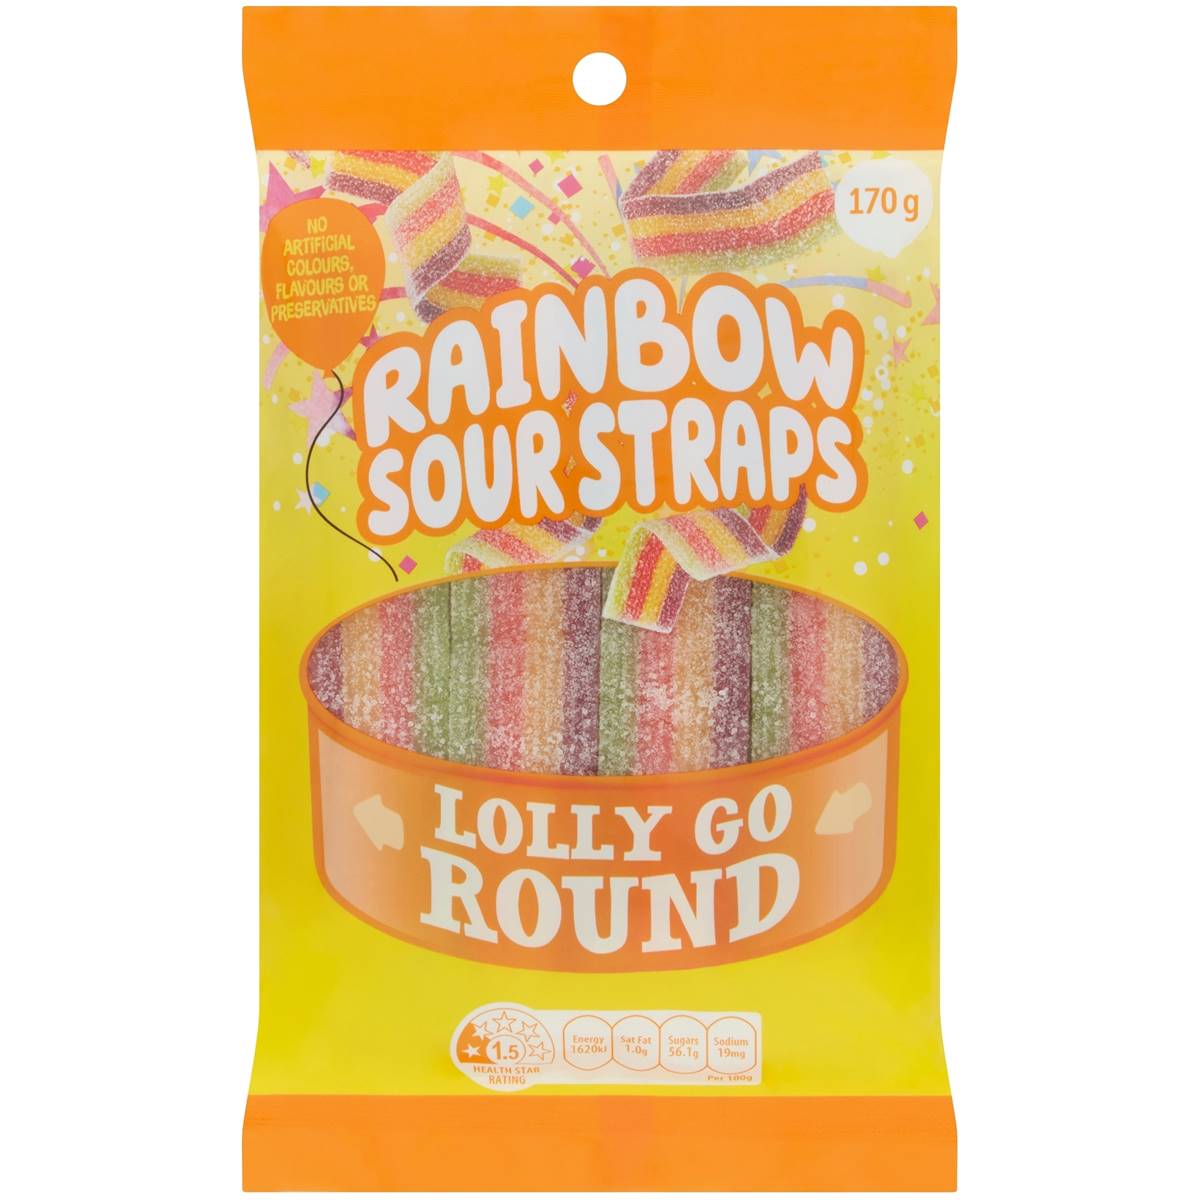 Calories in Lolly Go Round Round Rainbow Sour Straps